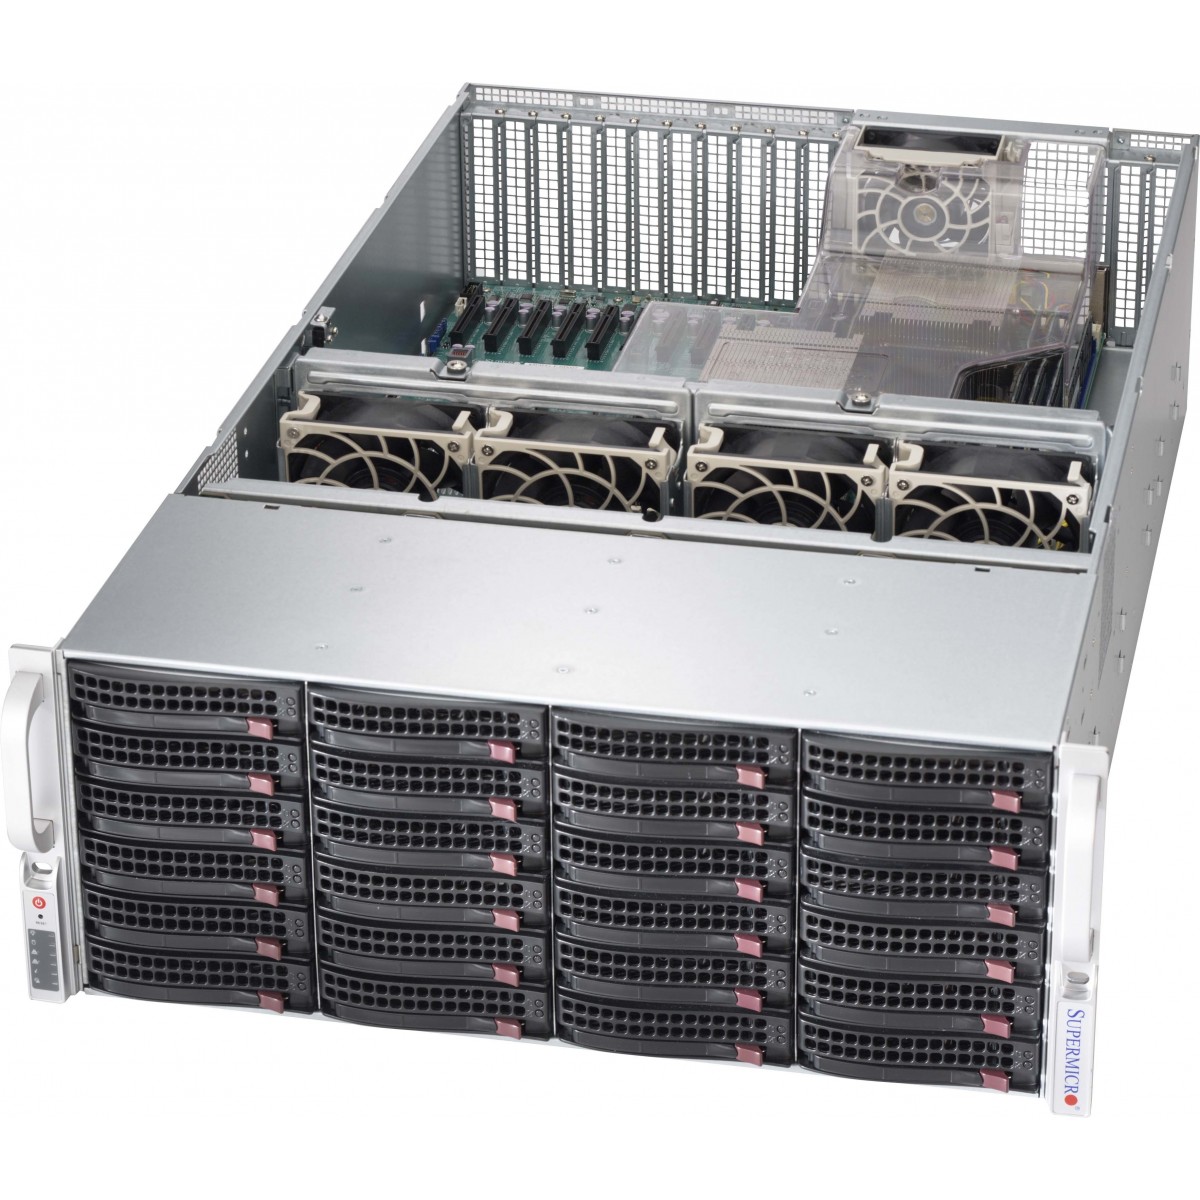 Supermicro CSE-846XE1C-R1K23B - Rack - Server - Black - ATX,EATX - 4U - Fan fail,HDD,LAN,Power,Power fail,System